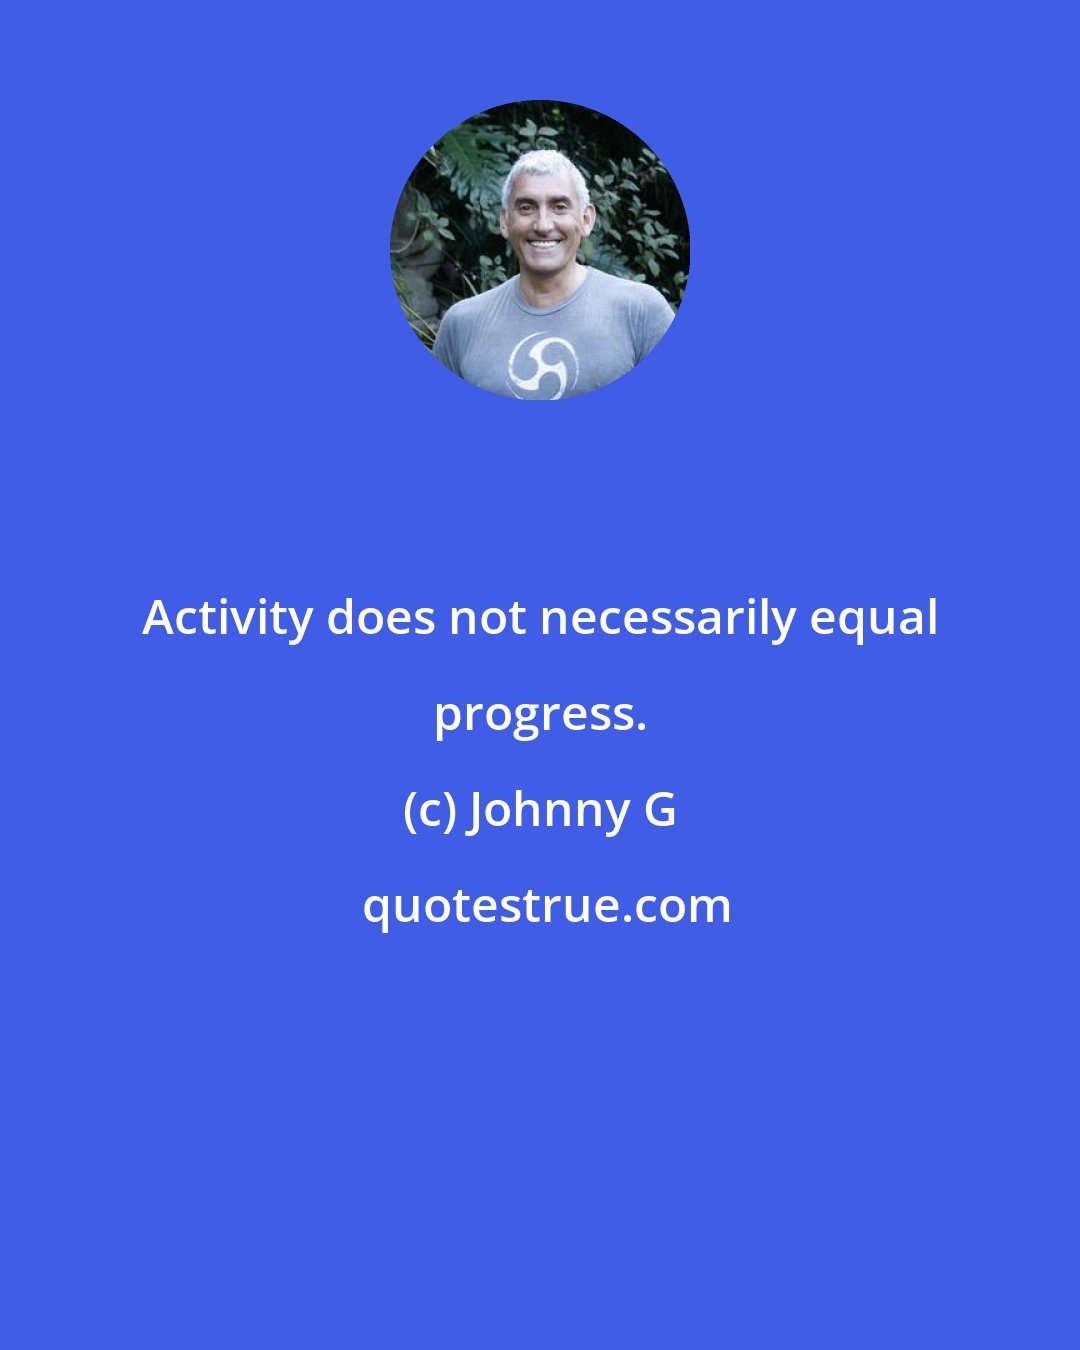 Johnny G: Activity does not necessarily equal progress.